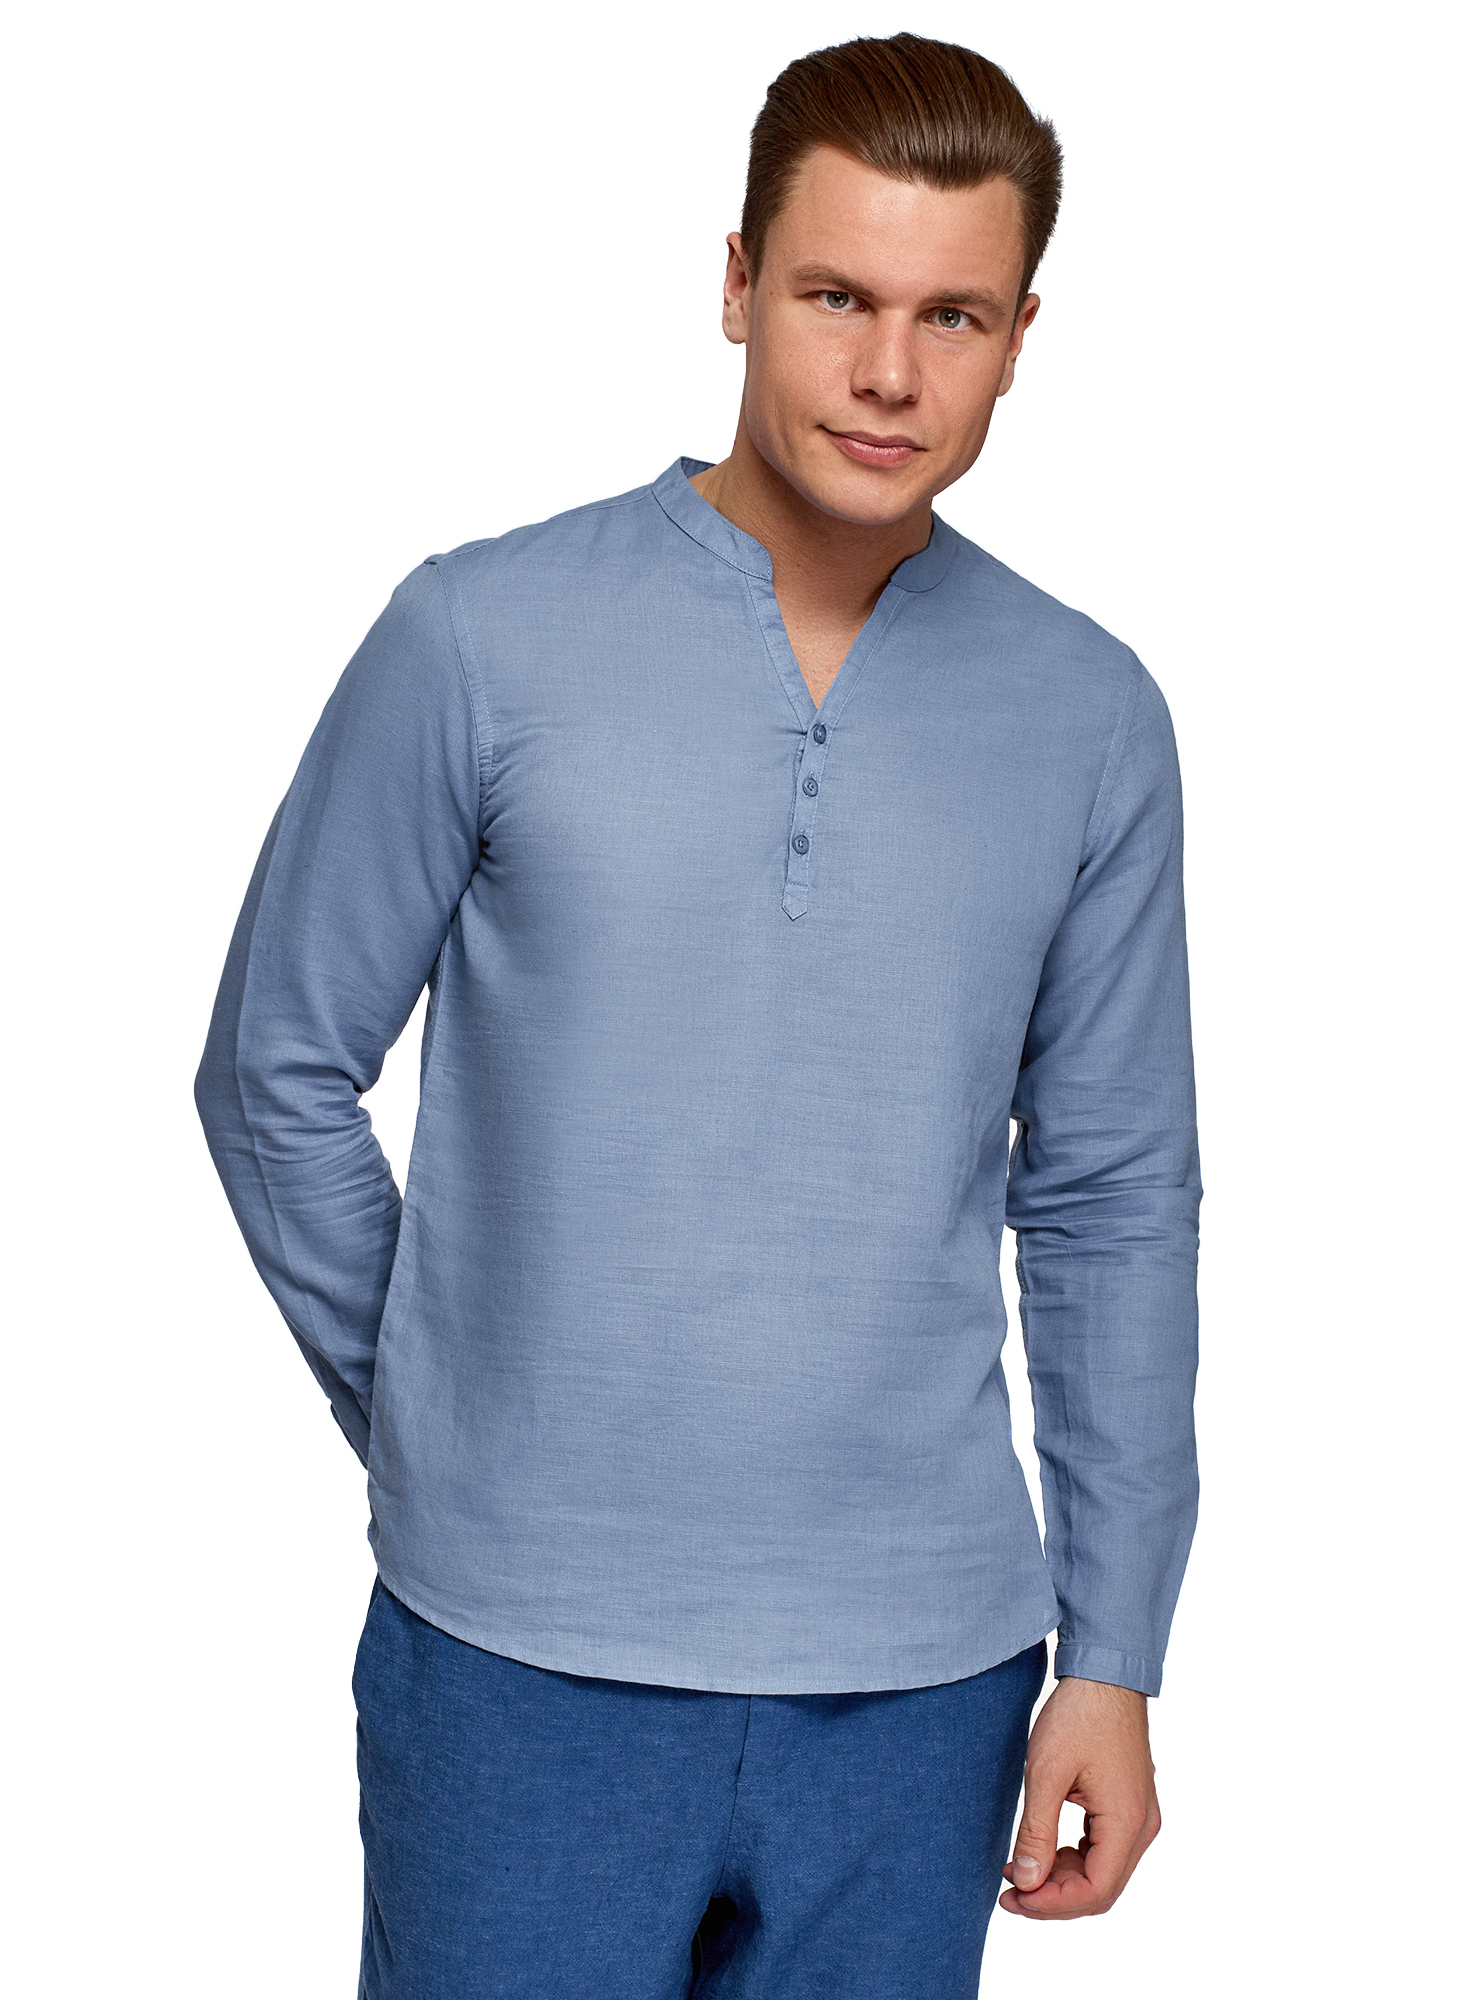 Рубашка мужская oodji 3B320002M-1 синяя S